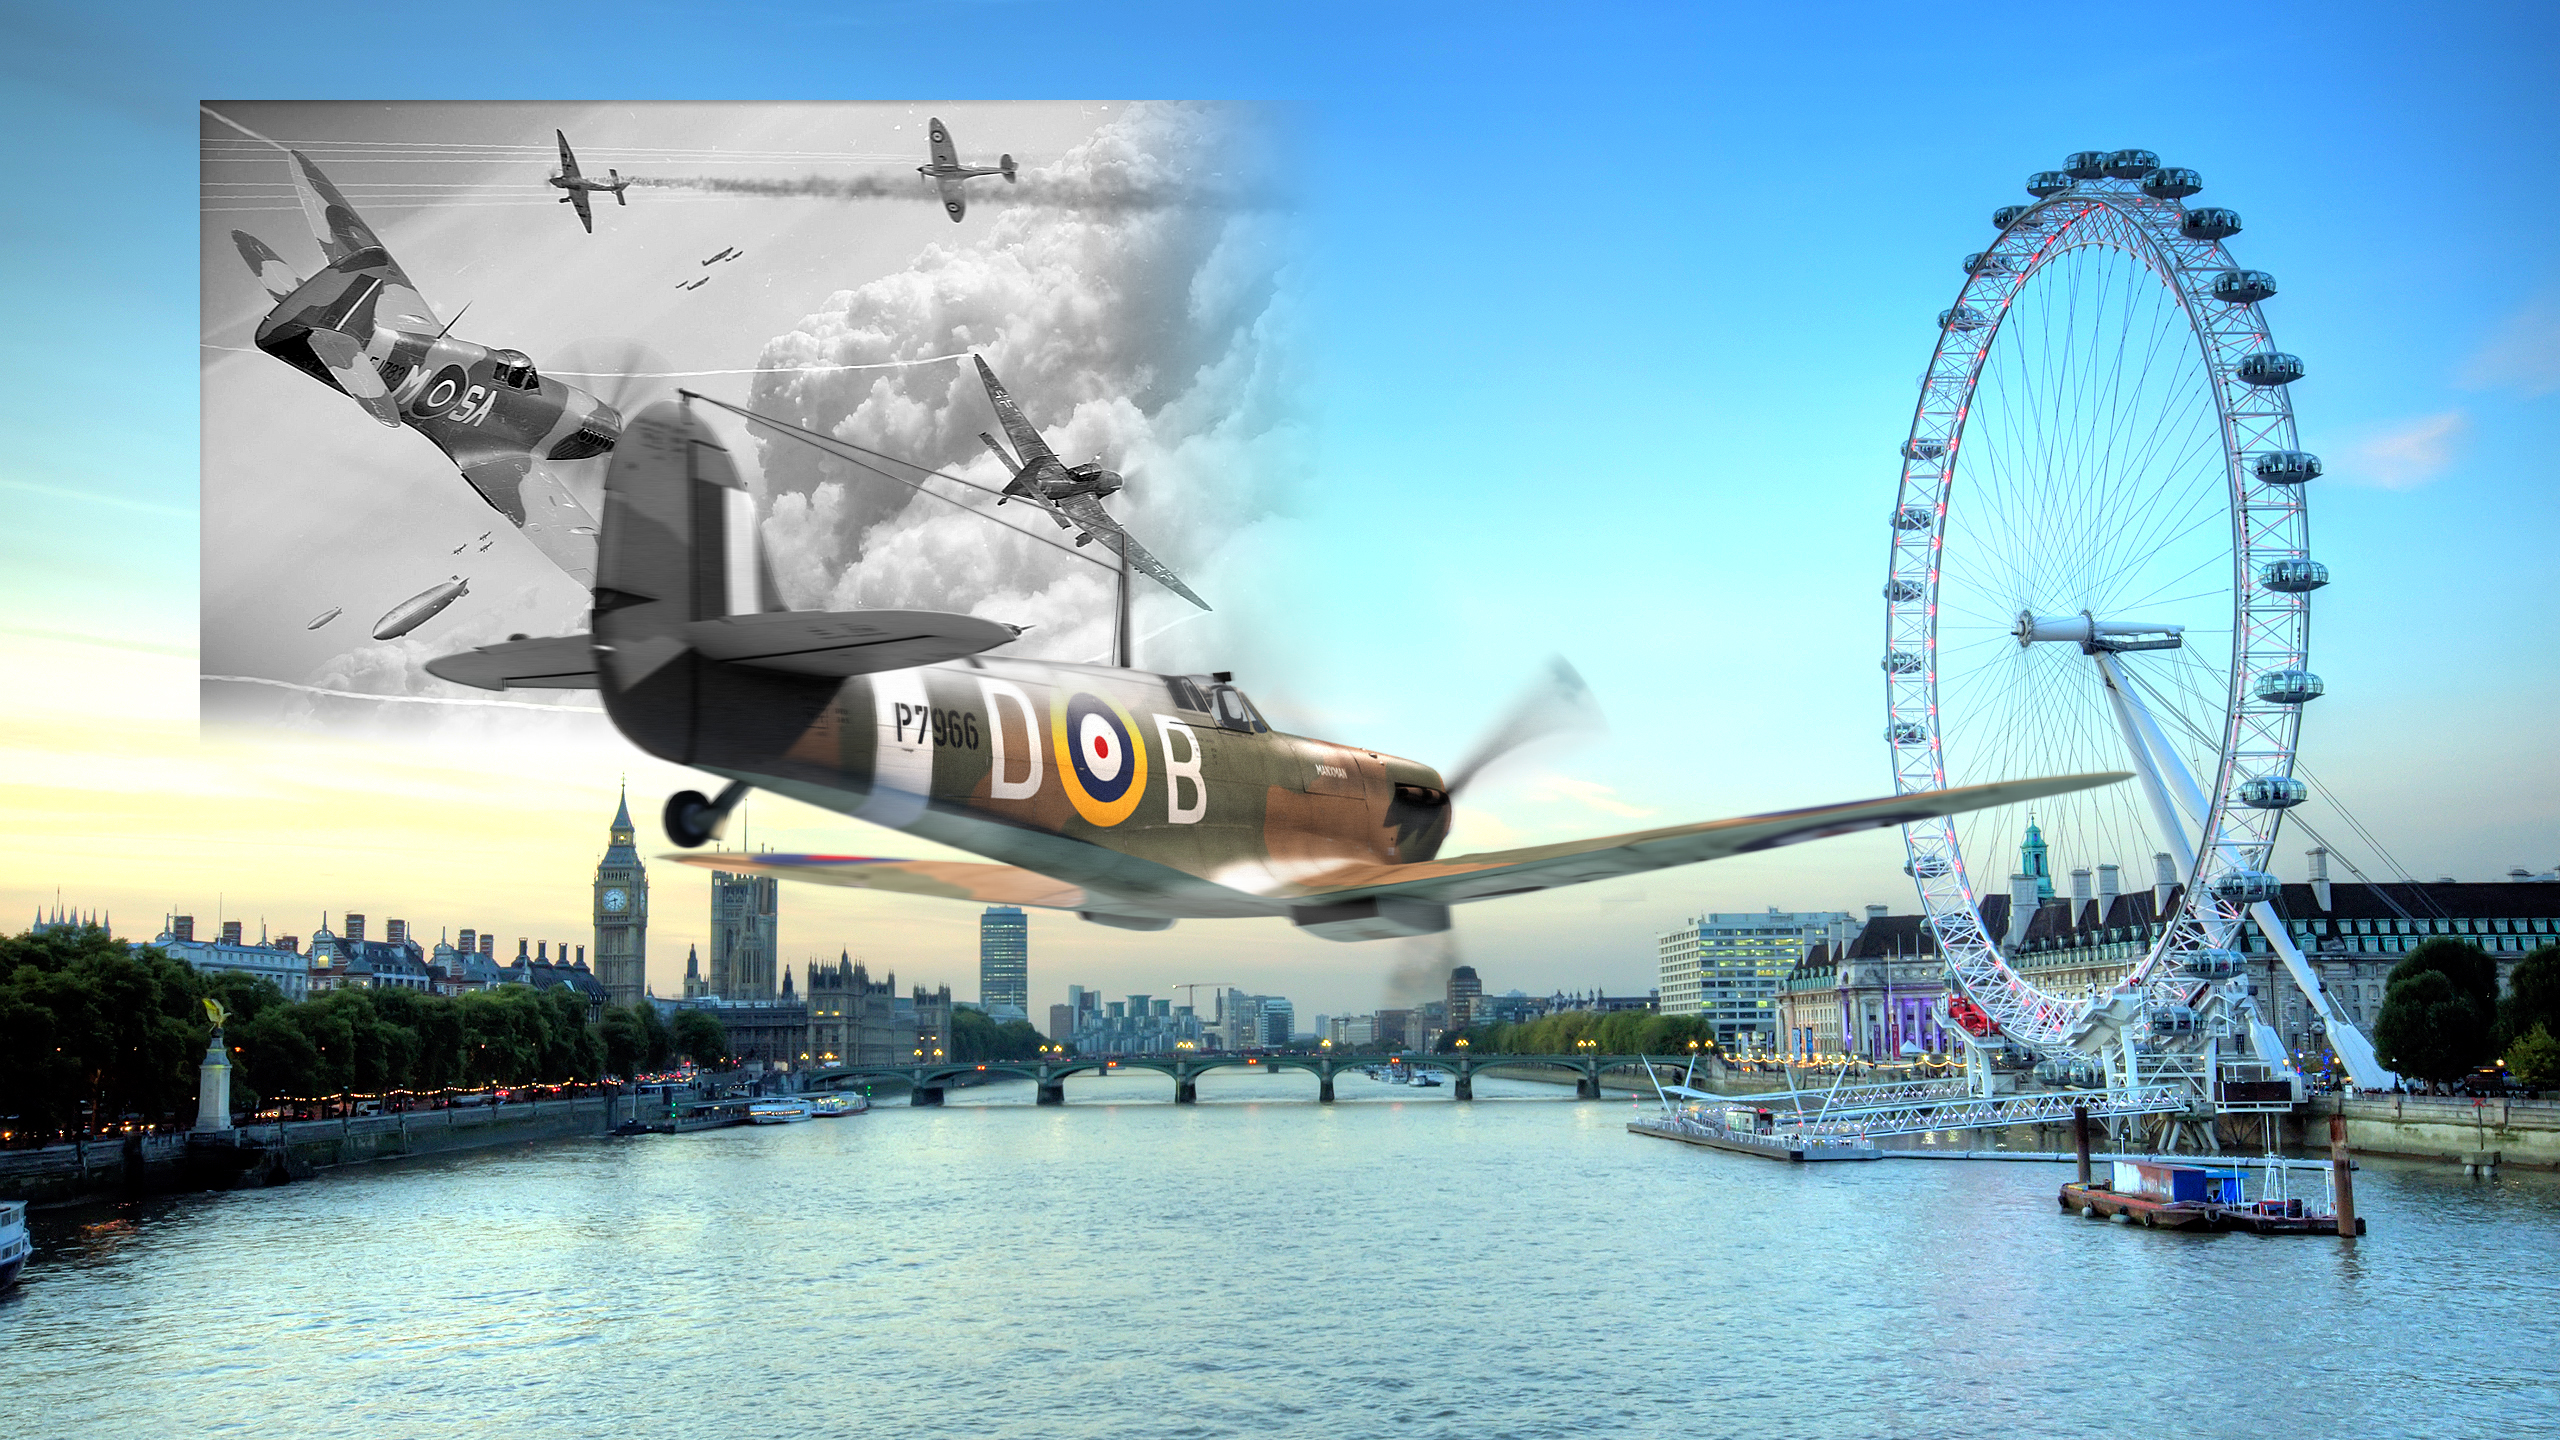 General 2560x1440 digital art aircraft London military aircraft